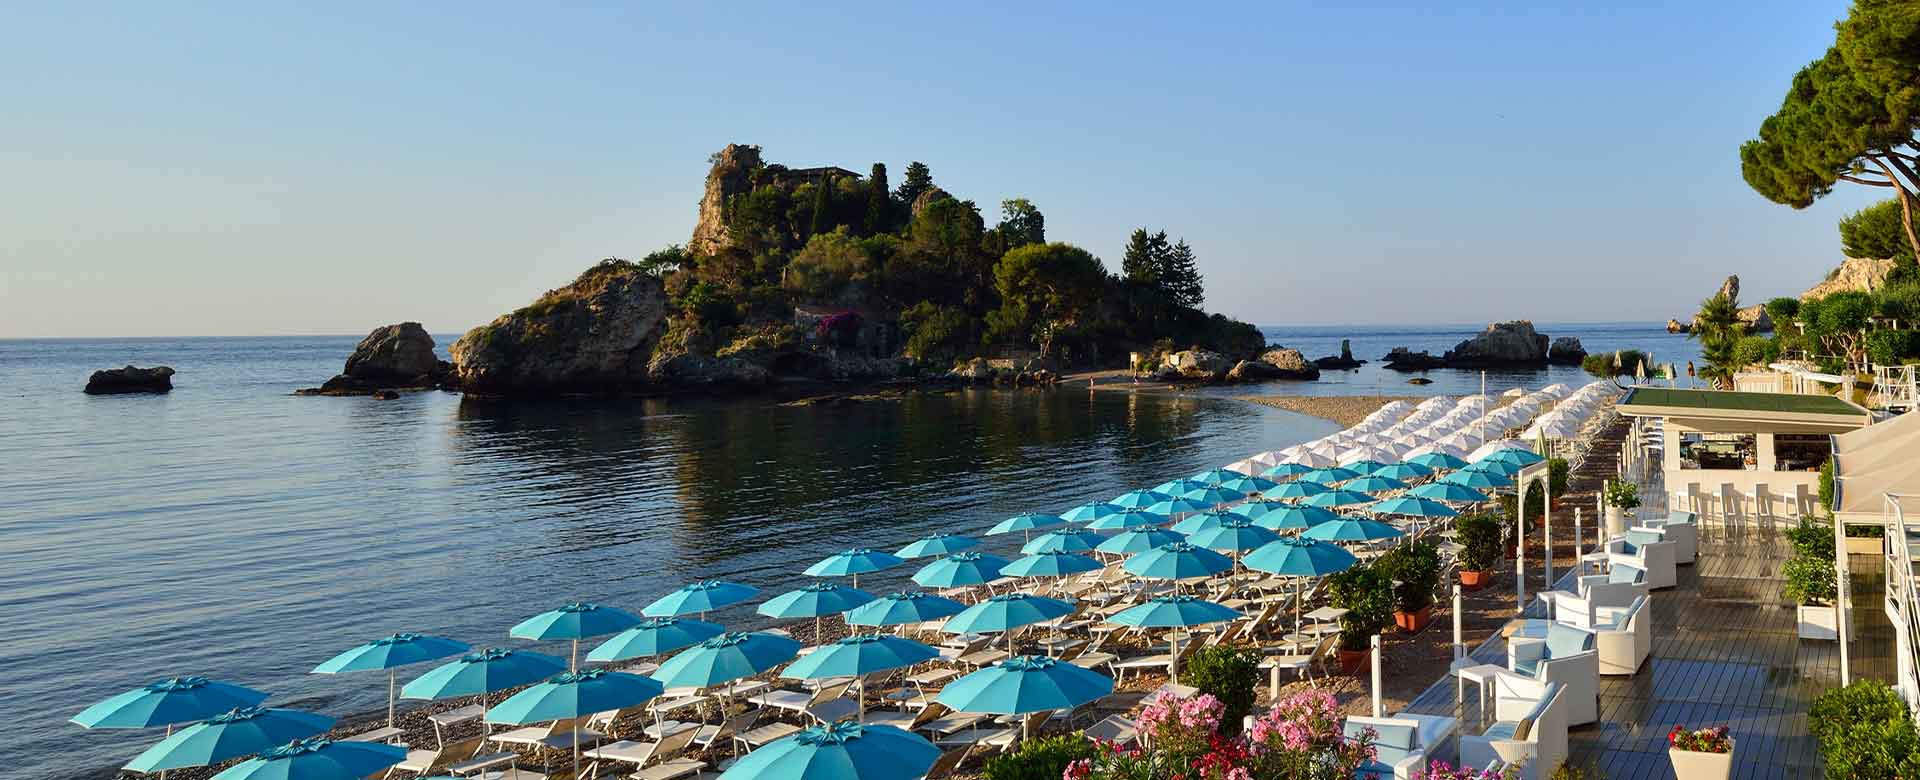 La Plage Resort, Taormina ©Andrea Getuli